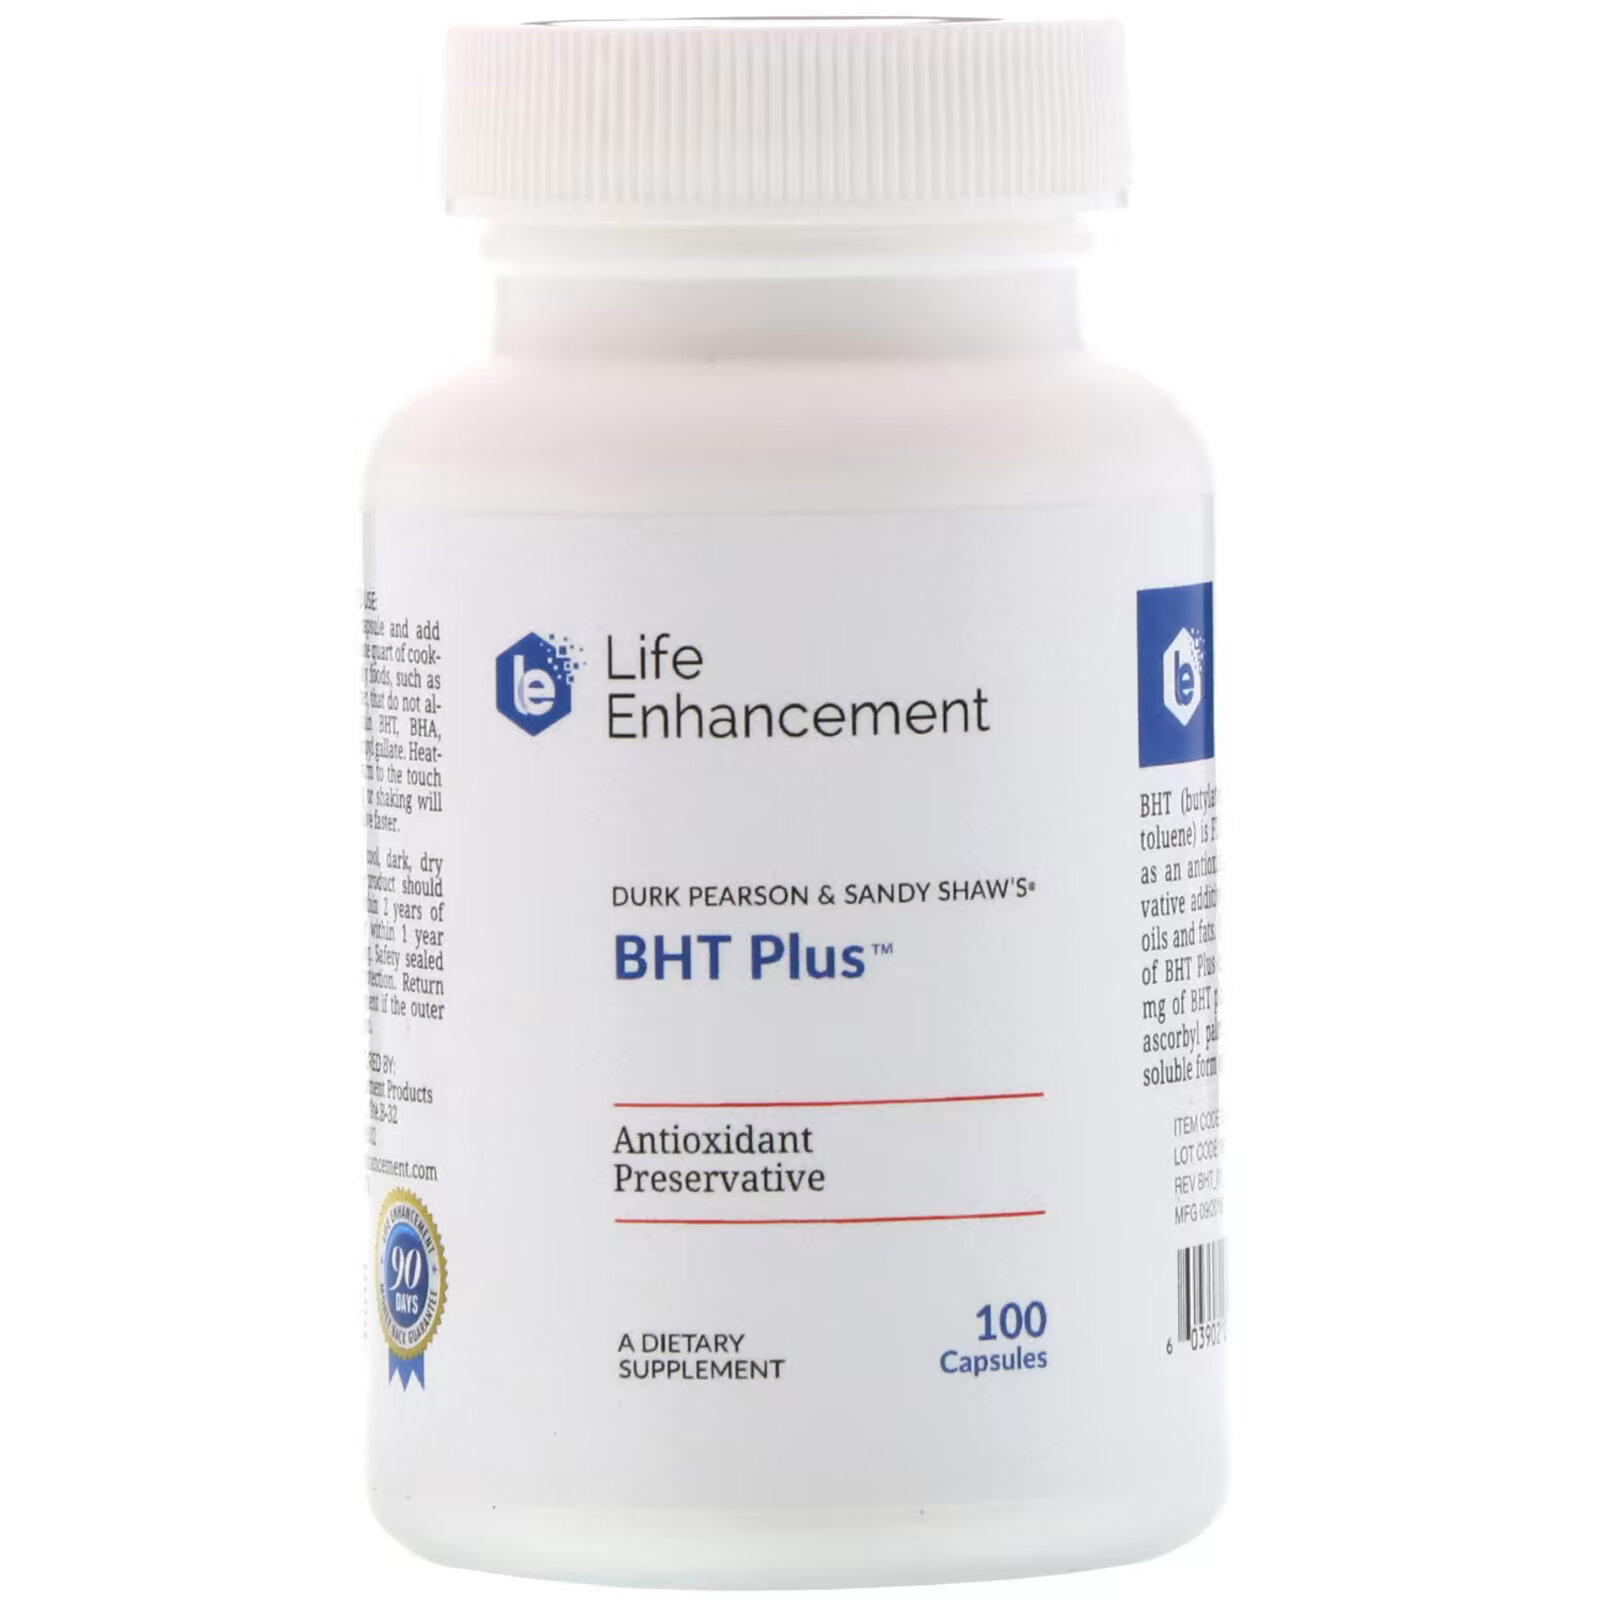 Life Enhancement, Durk Pearson & Sandy Shaw's BHT Plus, добавка с бутилгидрокситолуолом, 100 капсул life enhancement bye lori plus 180 капсул